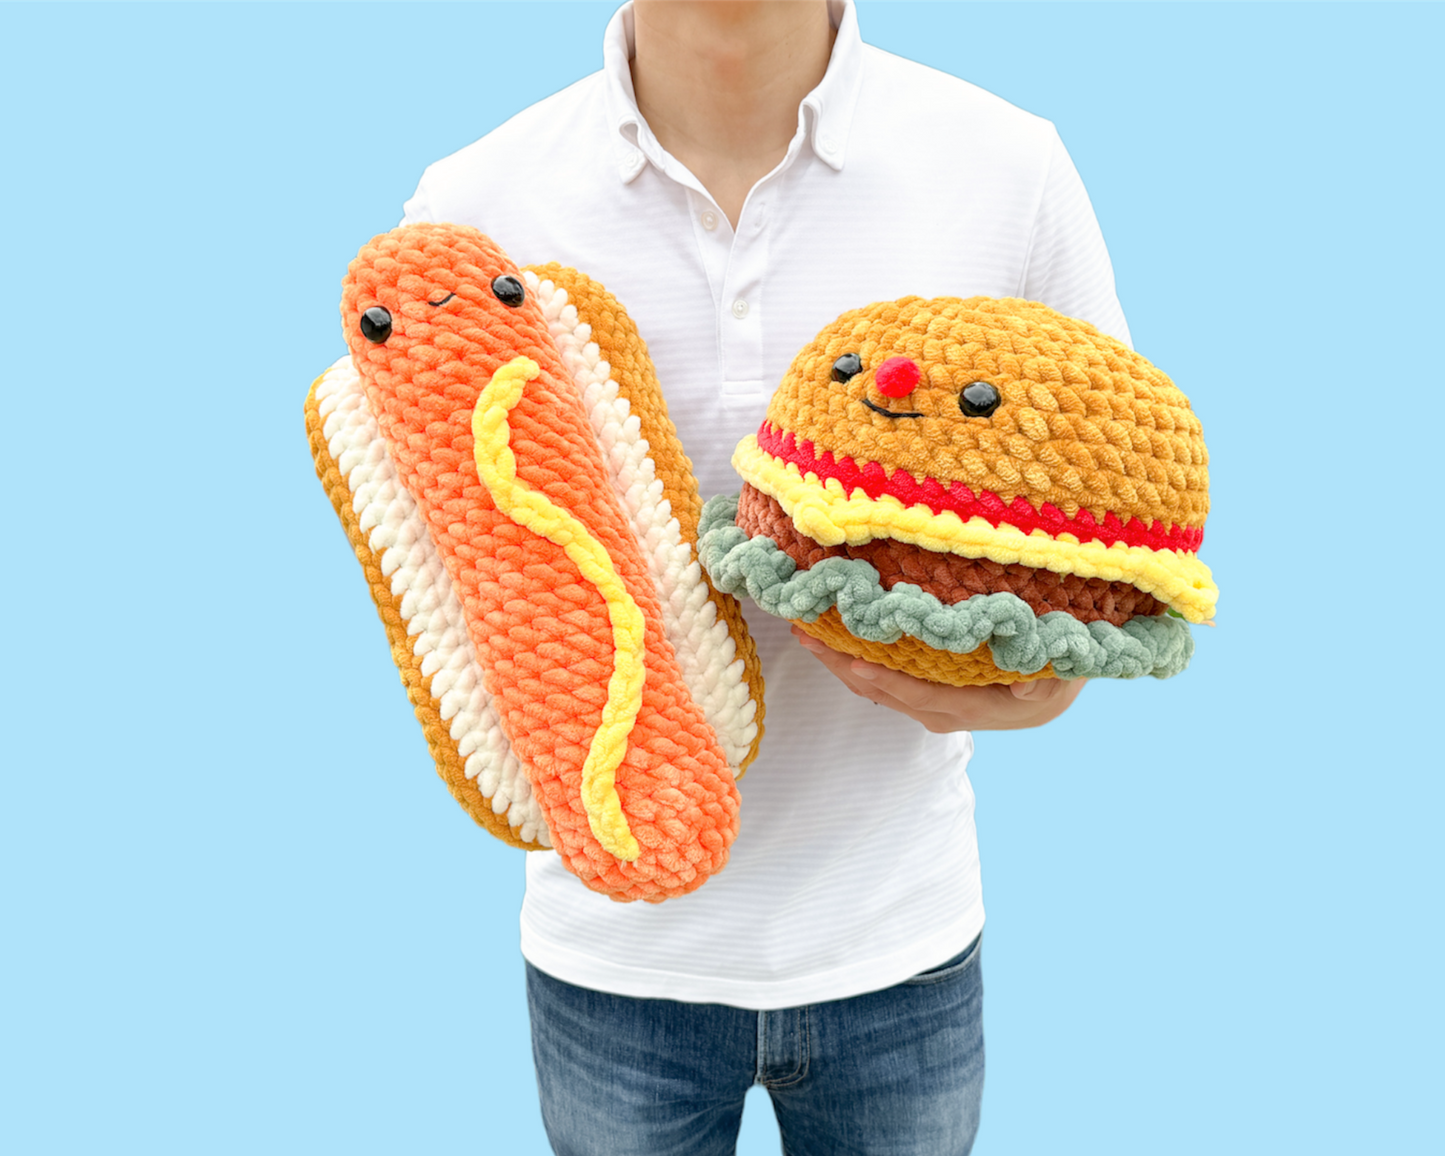 Giant Hot Dog Crochet Pattern